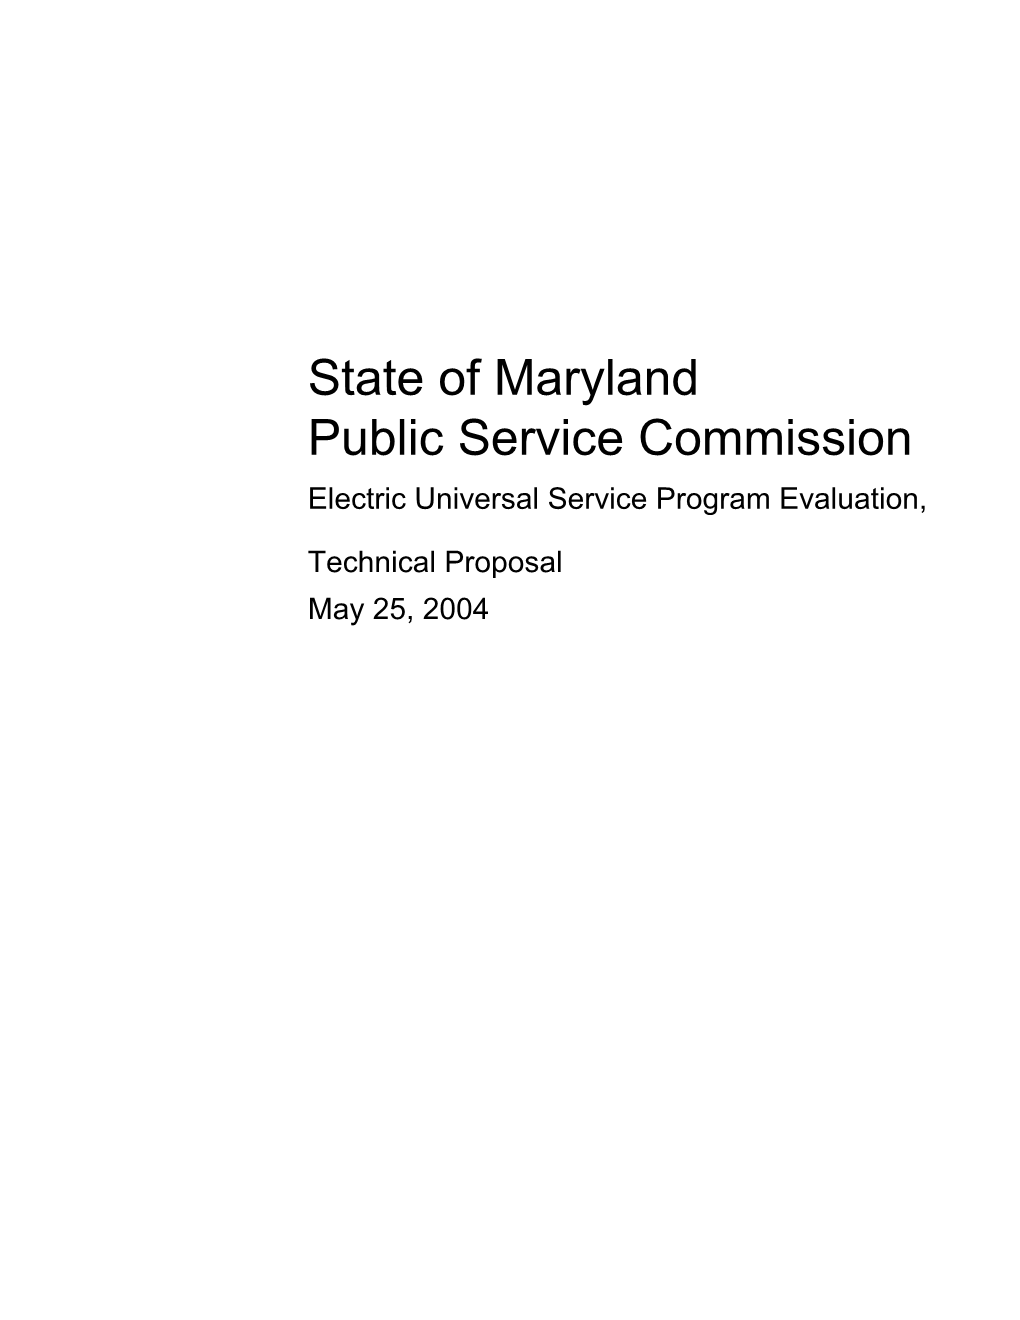 PSC Electric Universal Service Program Evaluation, Technical Proposal 5/25/04